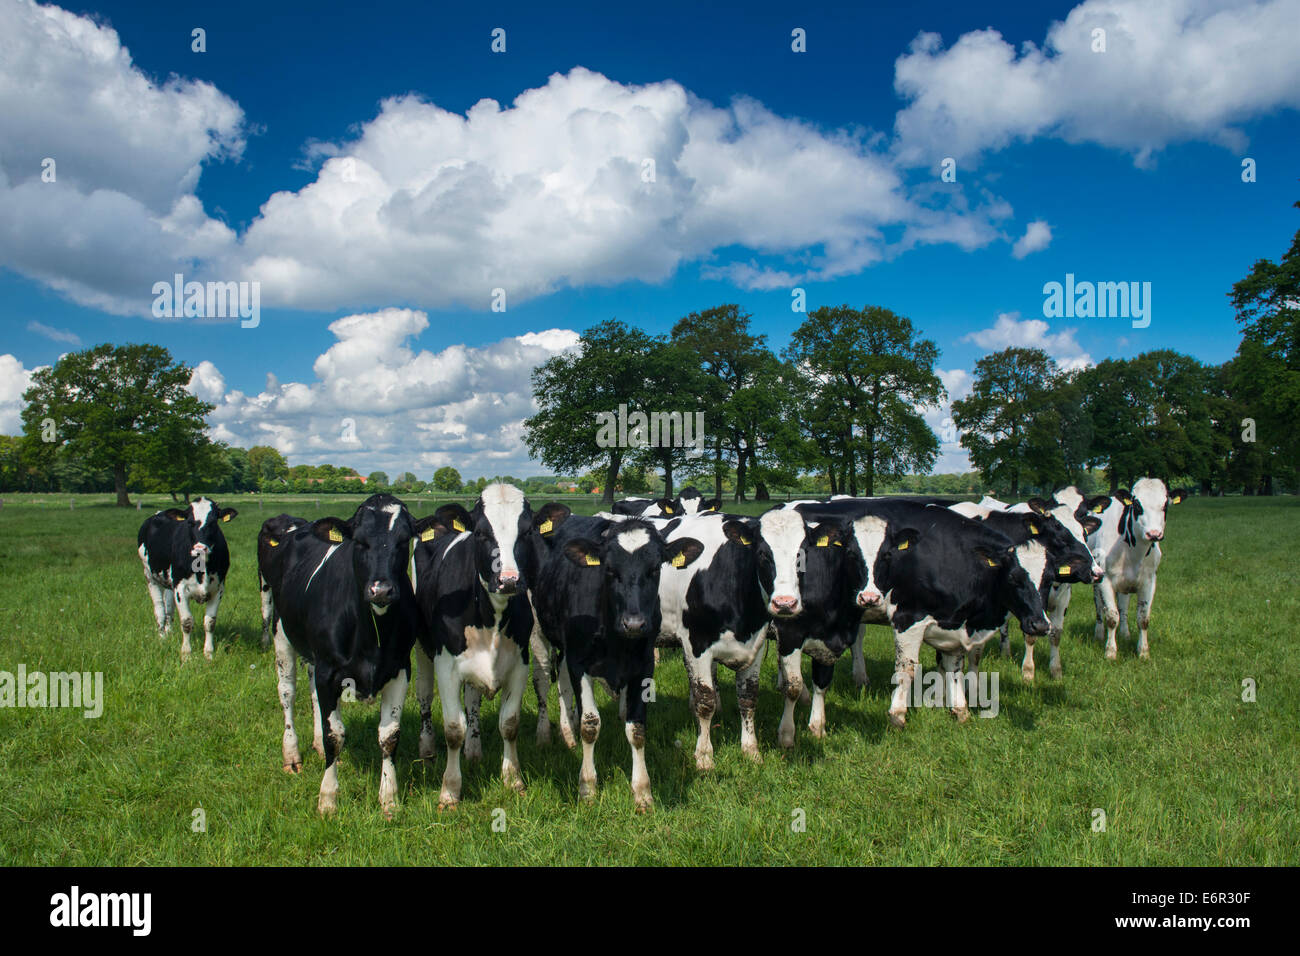 Les bovins laitiers sur les terres à pâturage, den Oever, goldenstedt, district de Vechta, oldenburger münsterland, Basse-Saxe, Allemagne Banque D'Images